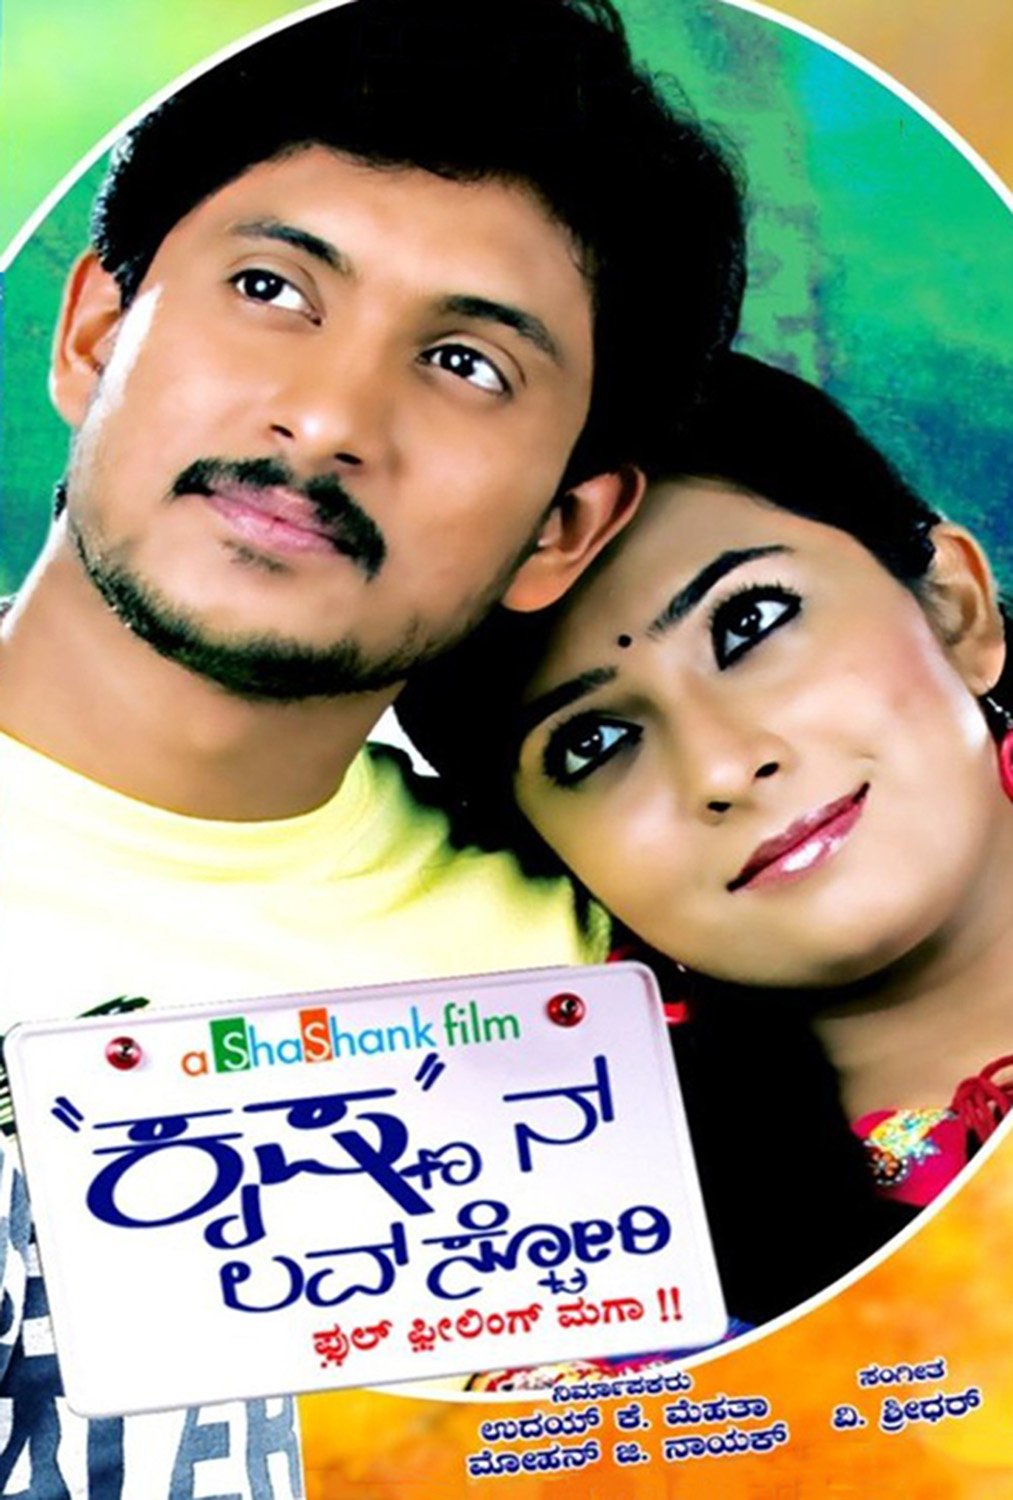 Krishnan Love Story Movie Poster